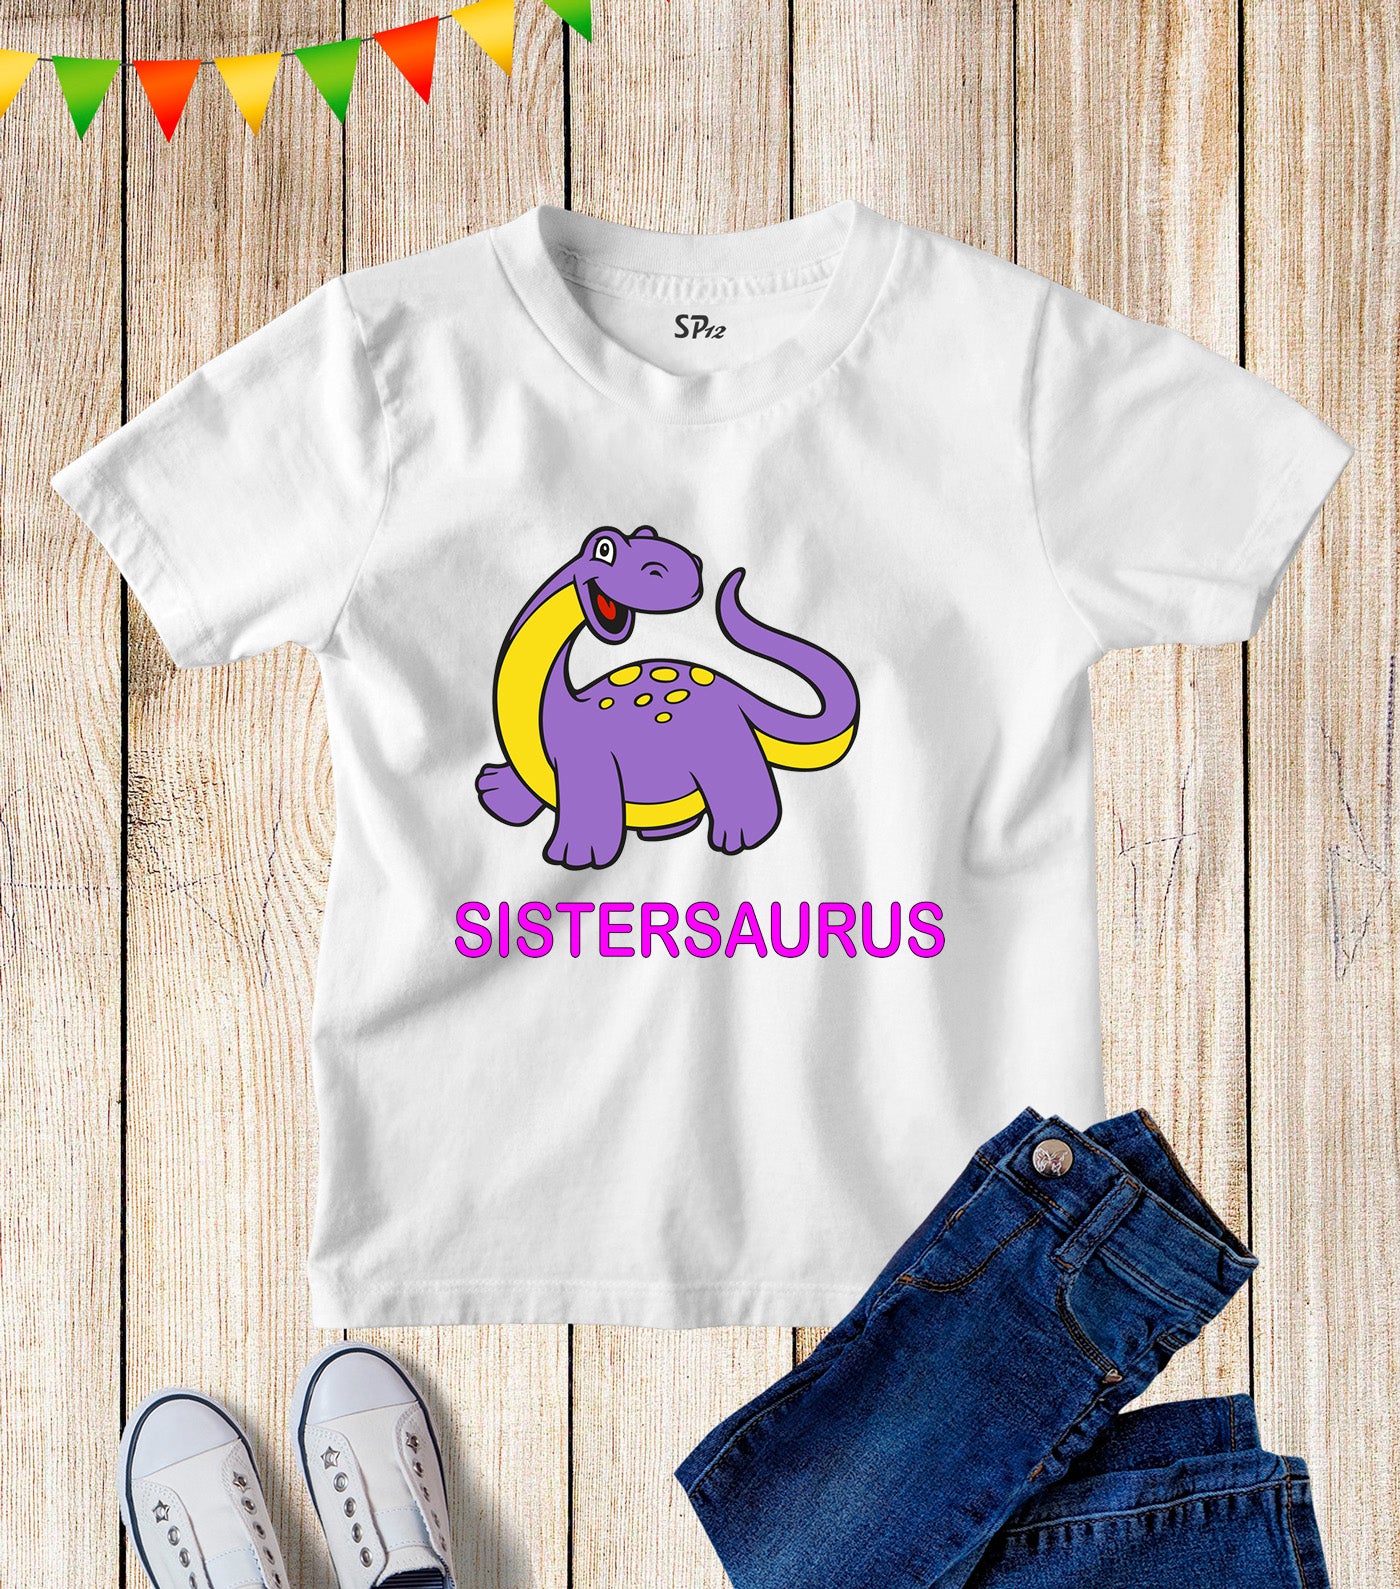 Sistersaurus Funny Kids T Shirt Gift Tee